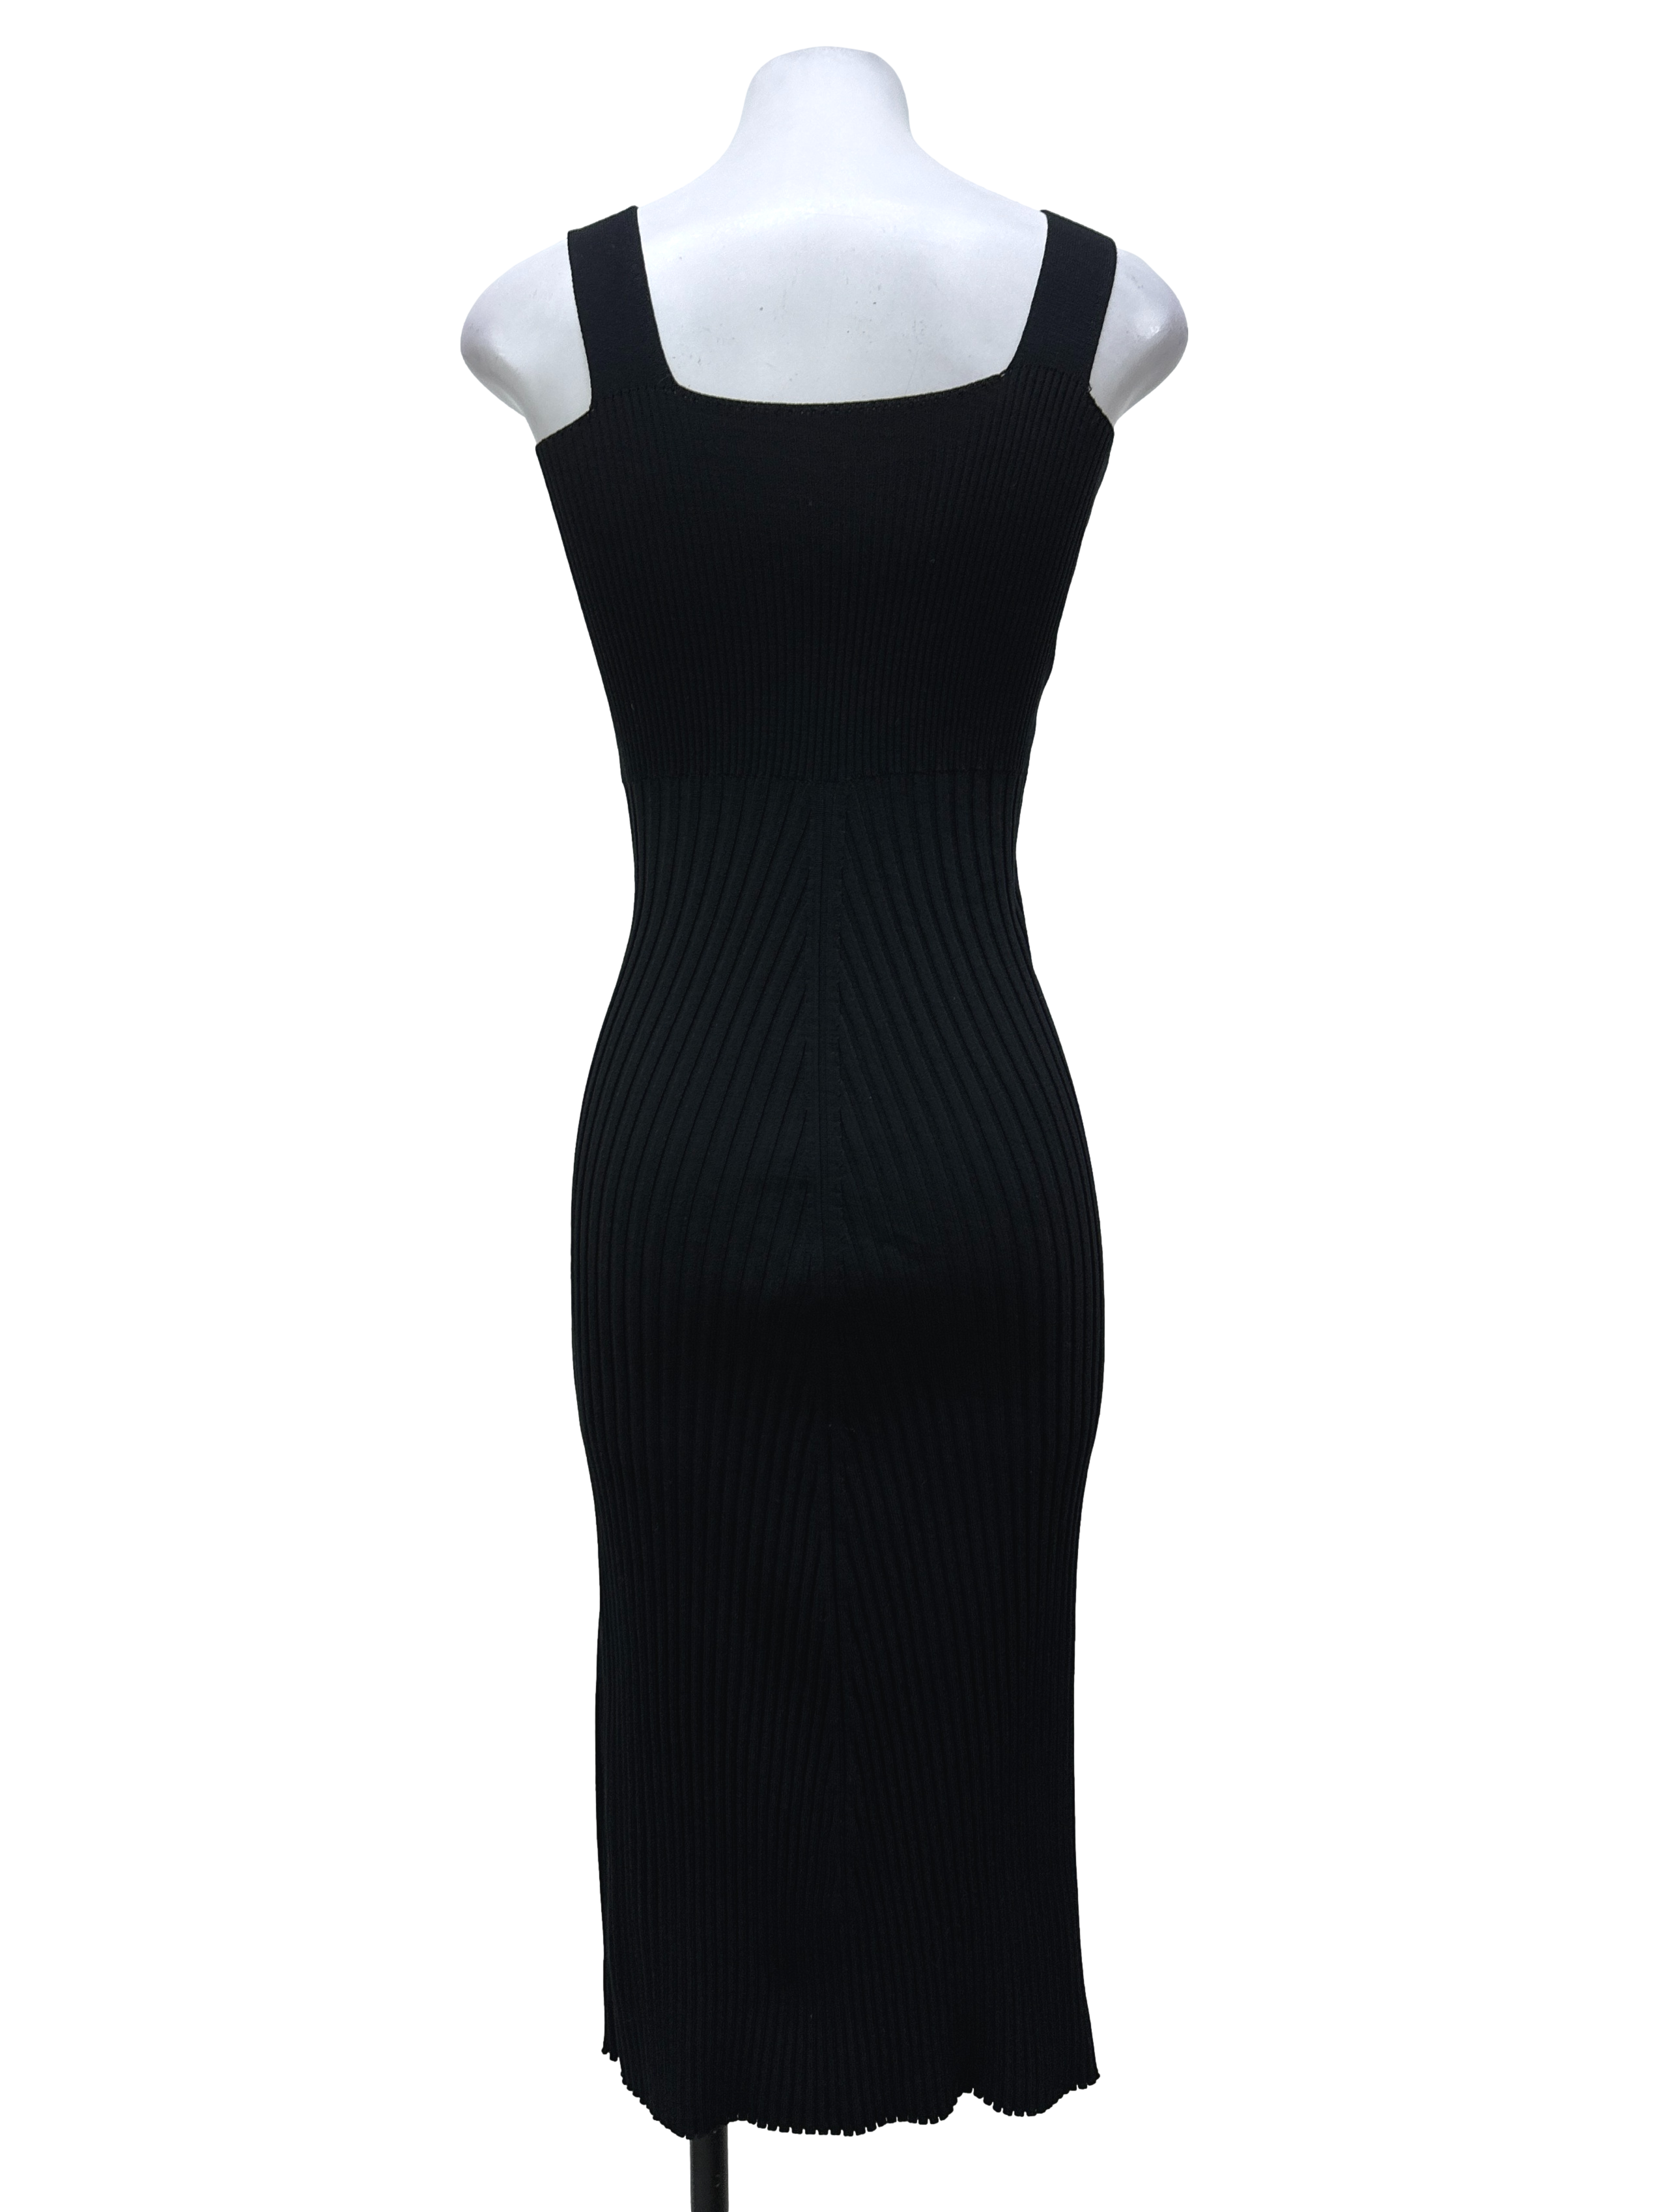 Black Sleeveless Bodycon Dress